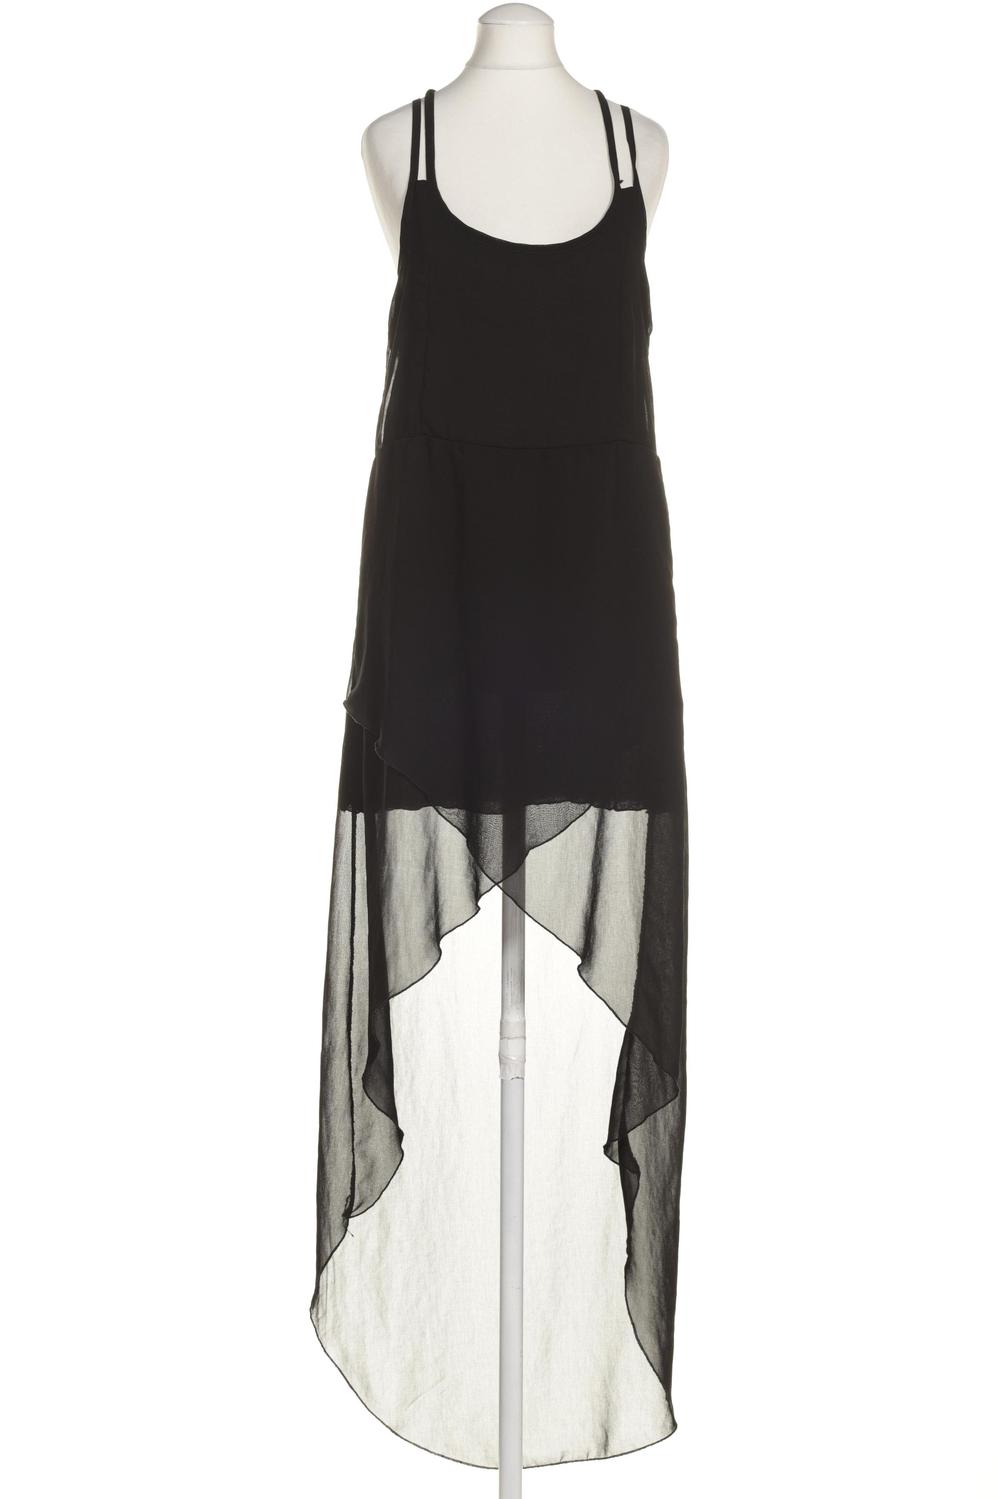 Brandy Melville Kleid Damen Dress Damenkleid Gr Xs Baumwolle Schwarz Bdda978 Ebay